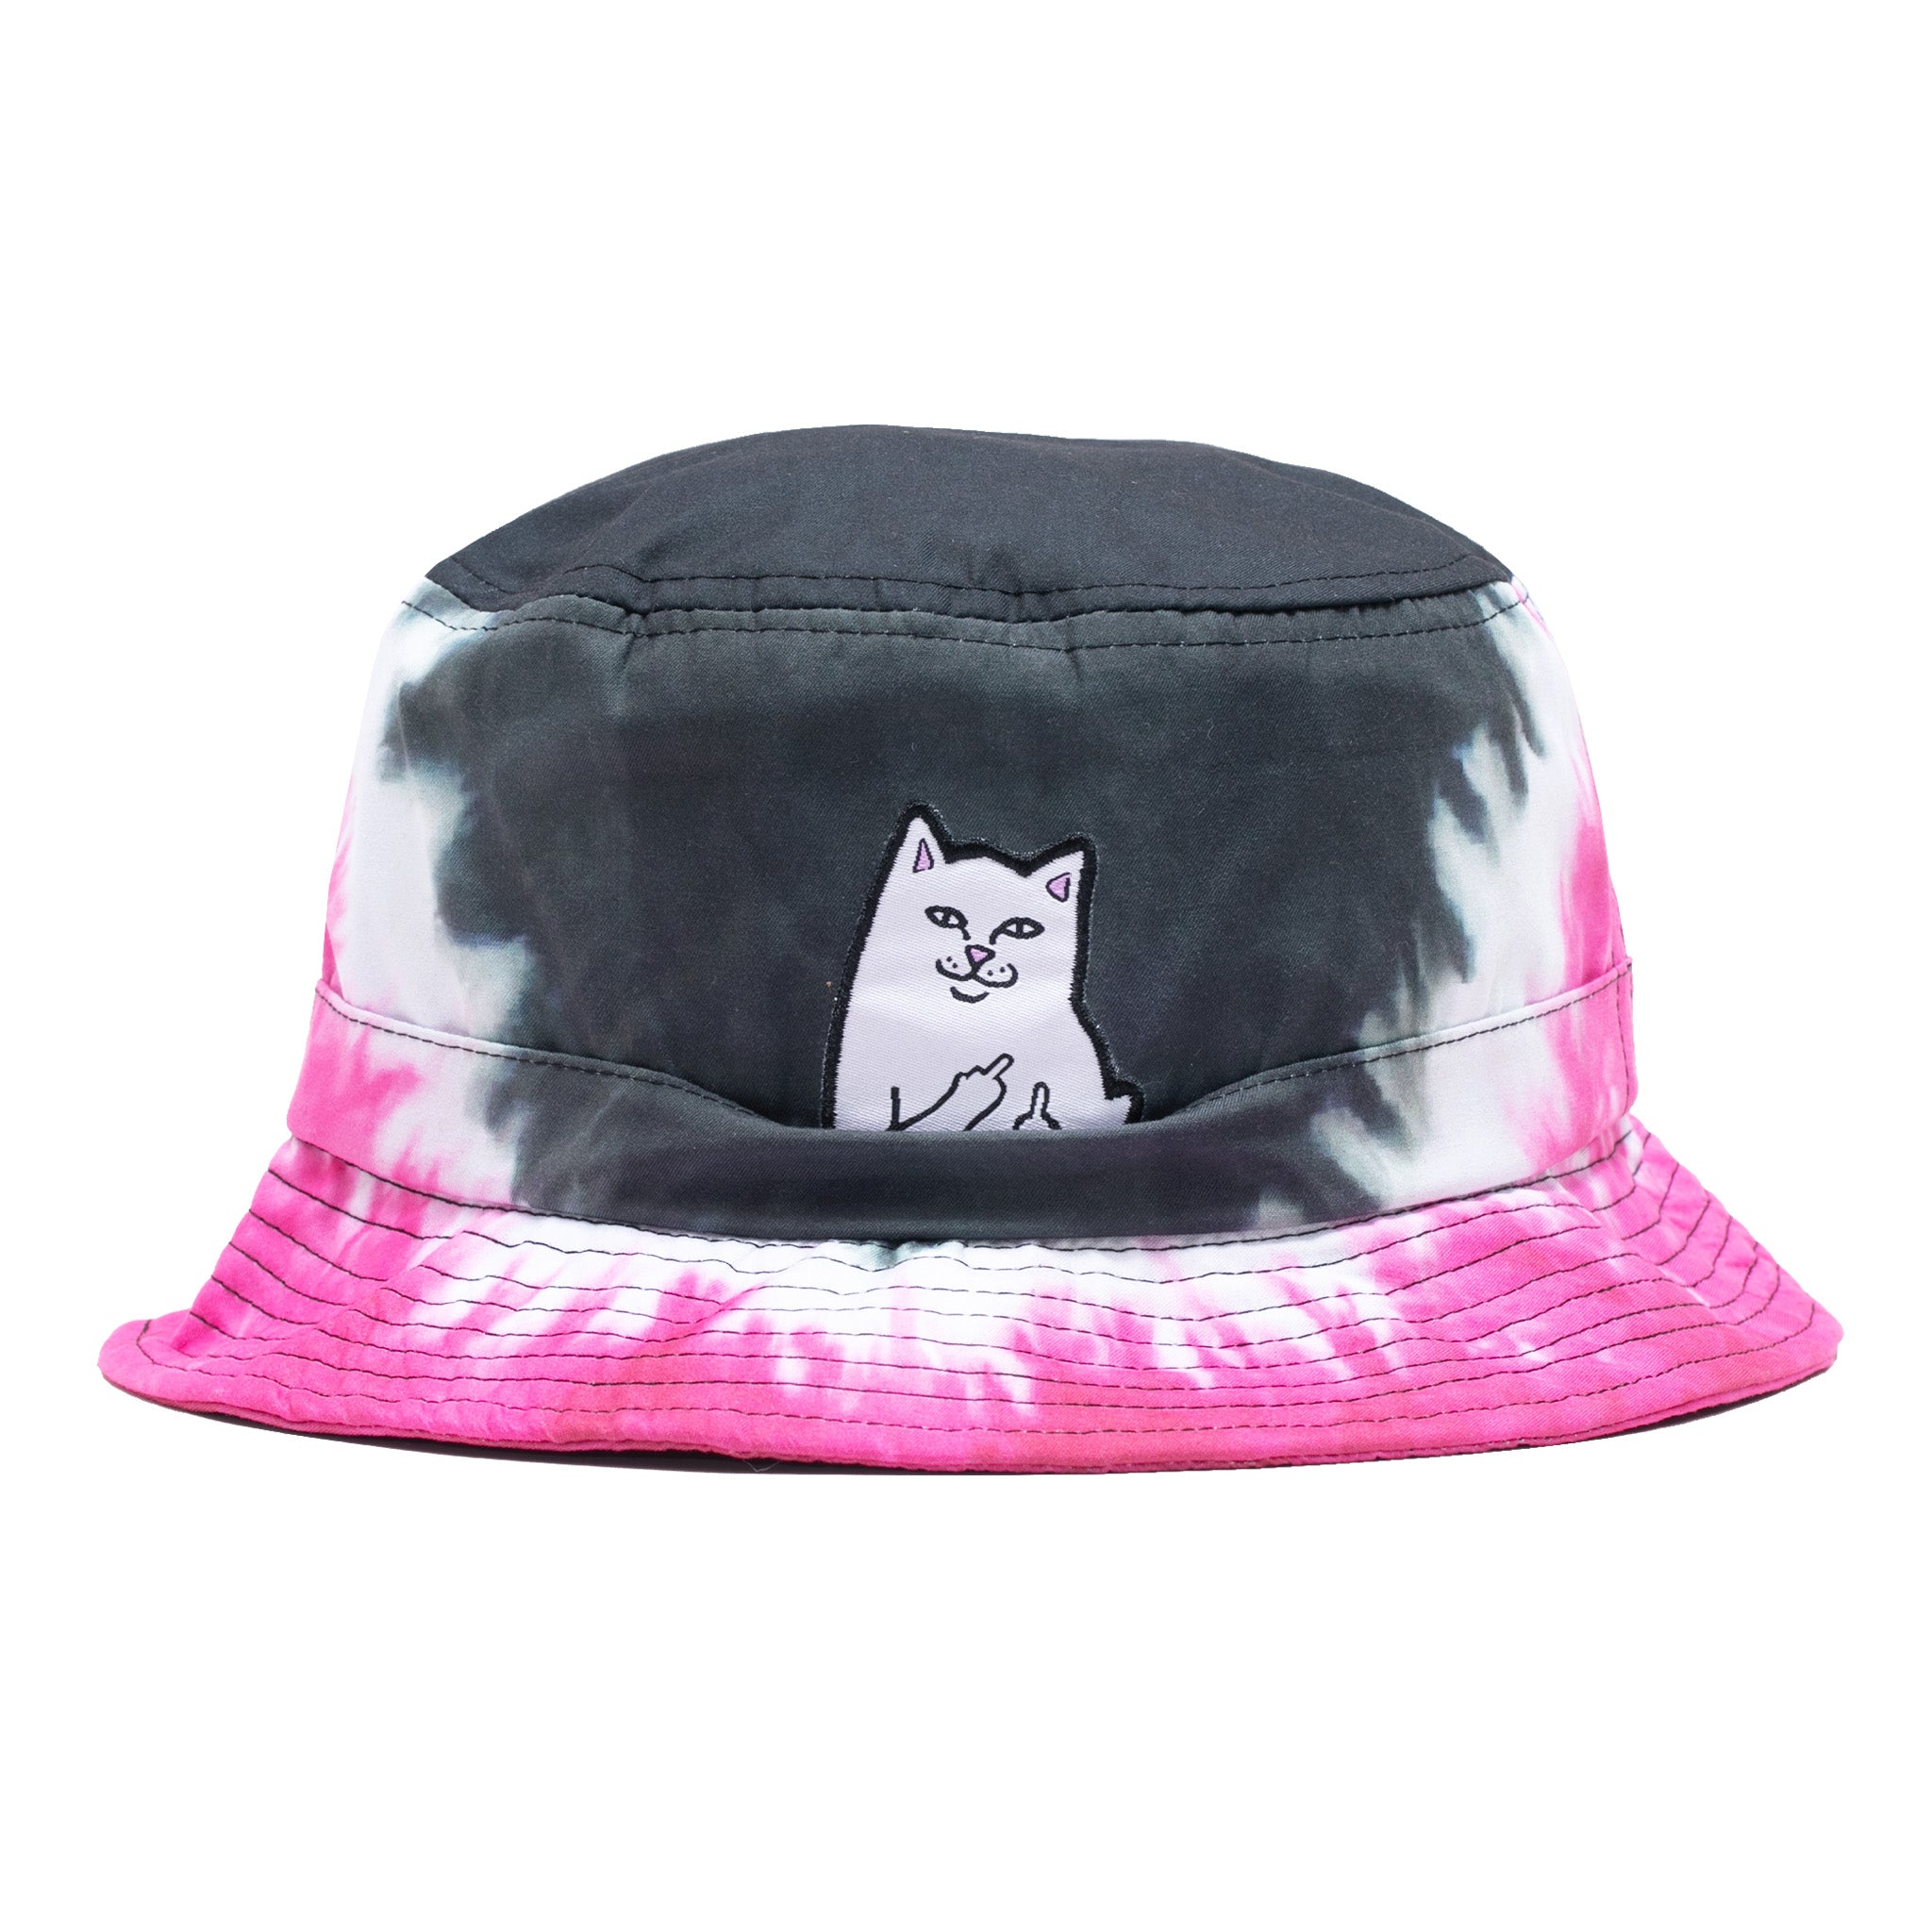 Lord Nermal Bucket Hat (Pink)